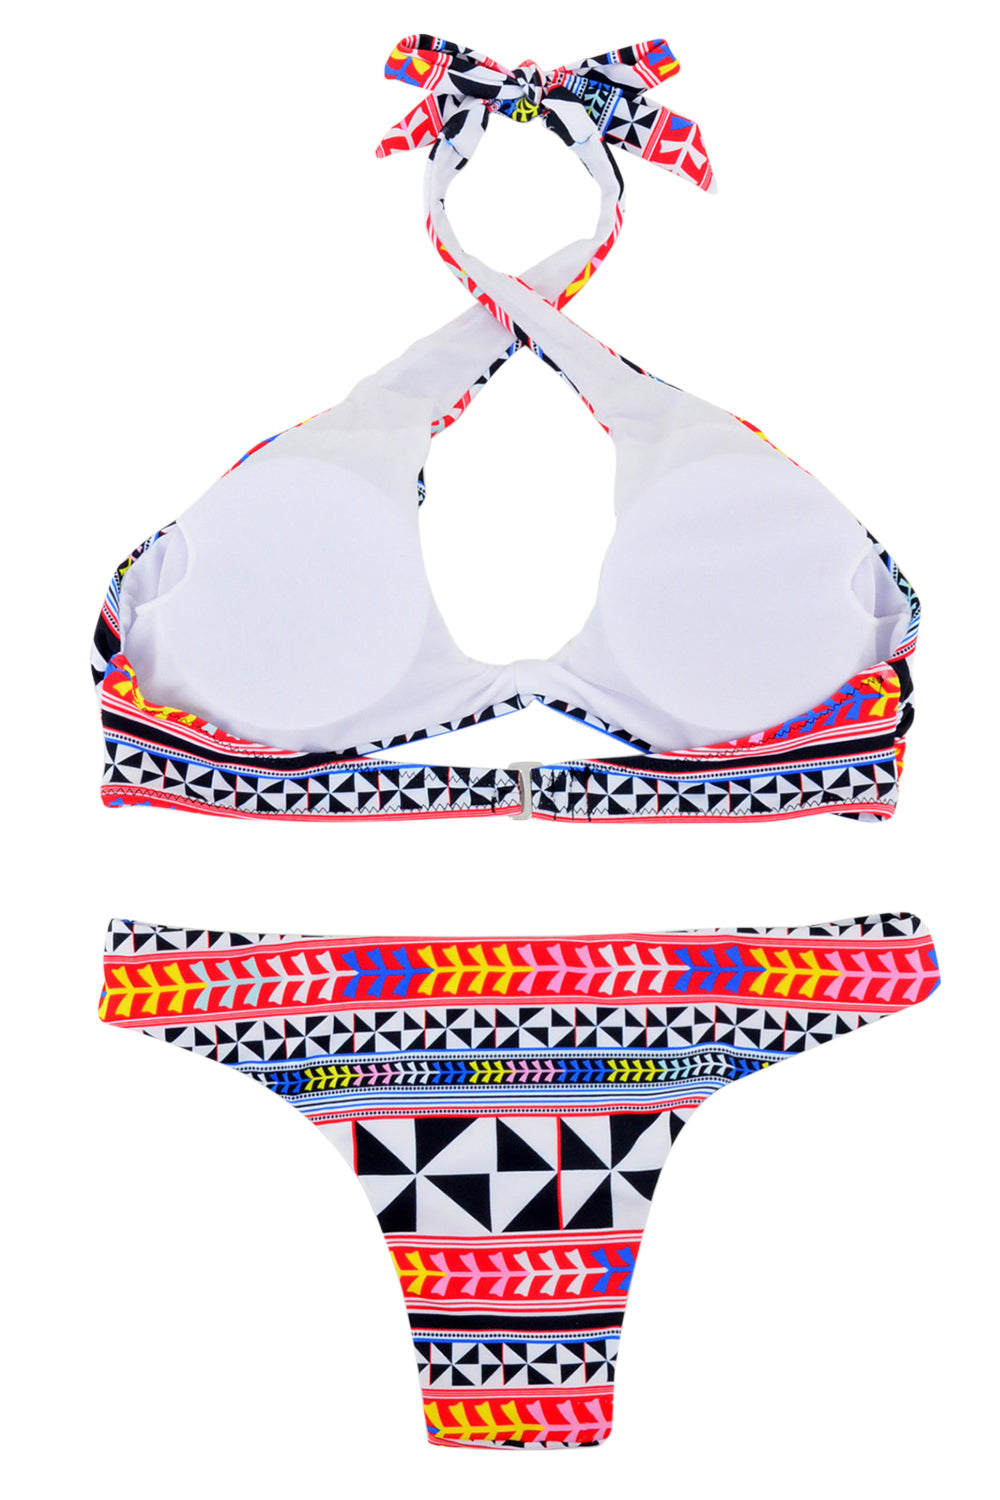 Iyasson Geometric Pattern Cross Front Halter Bikini Sets